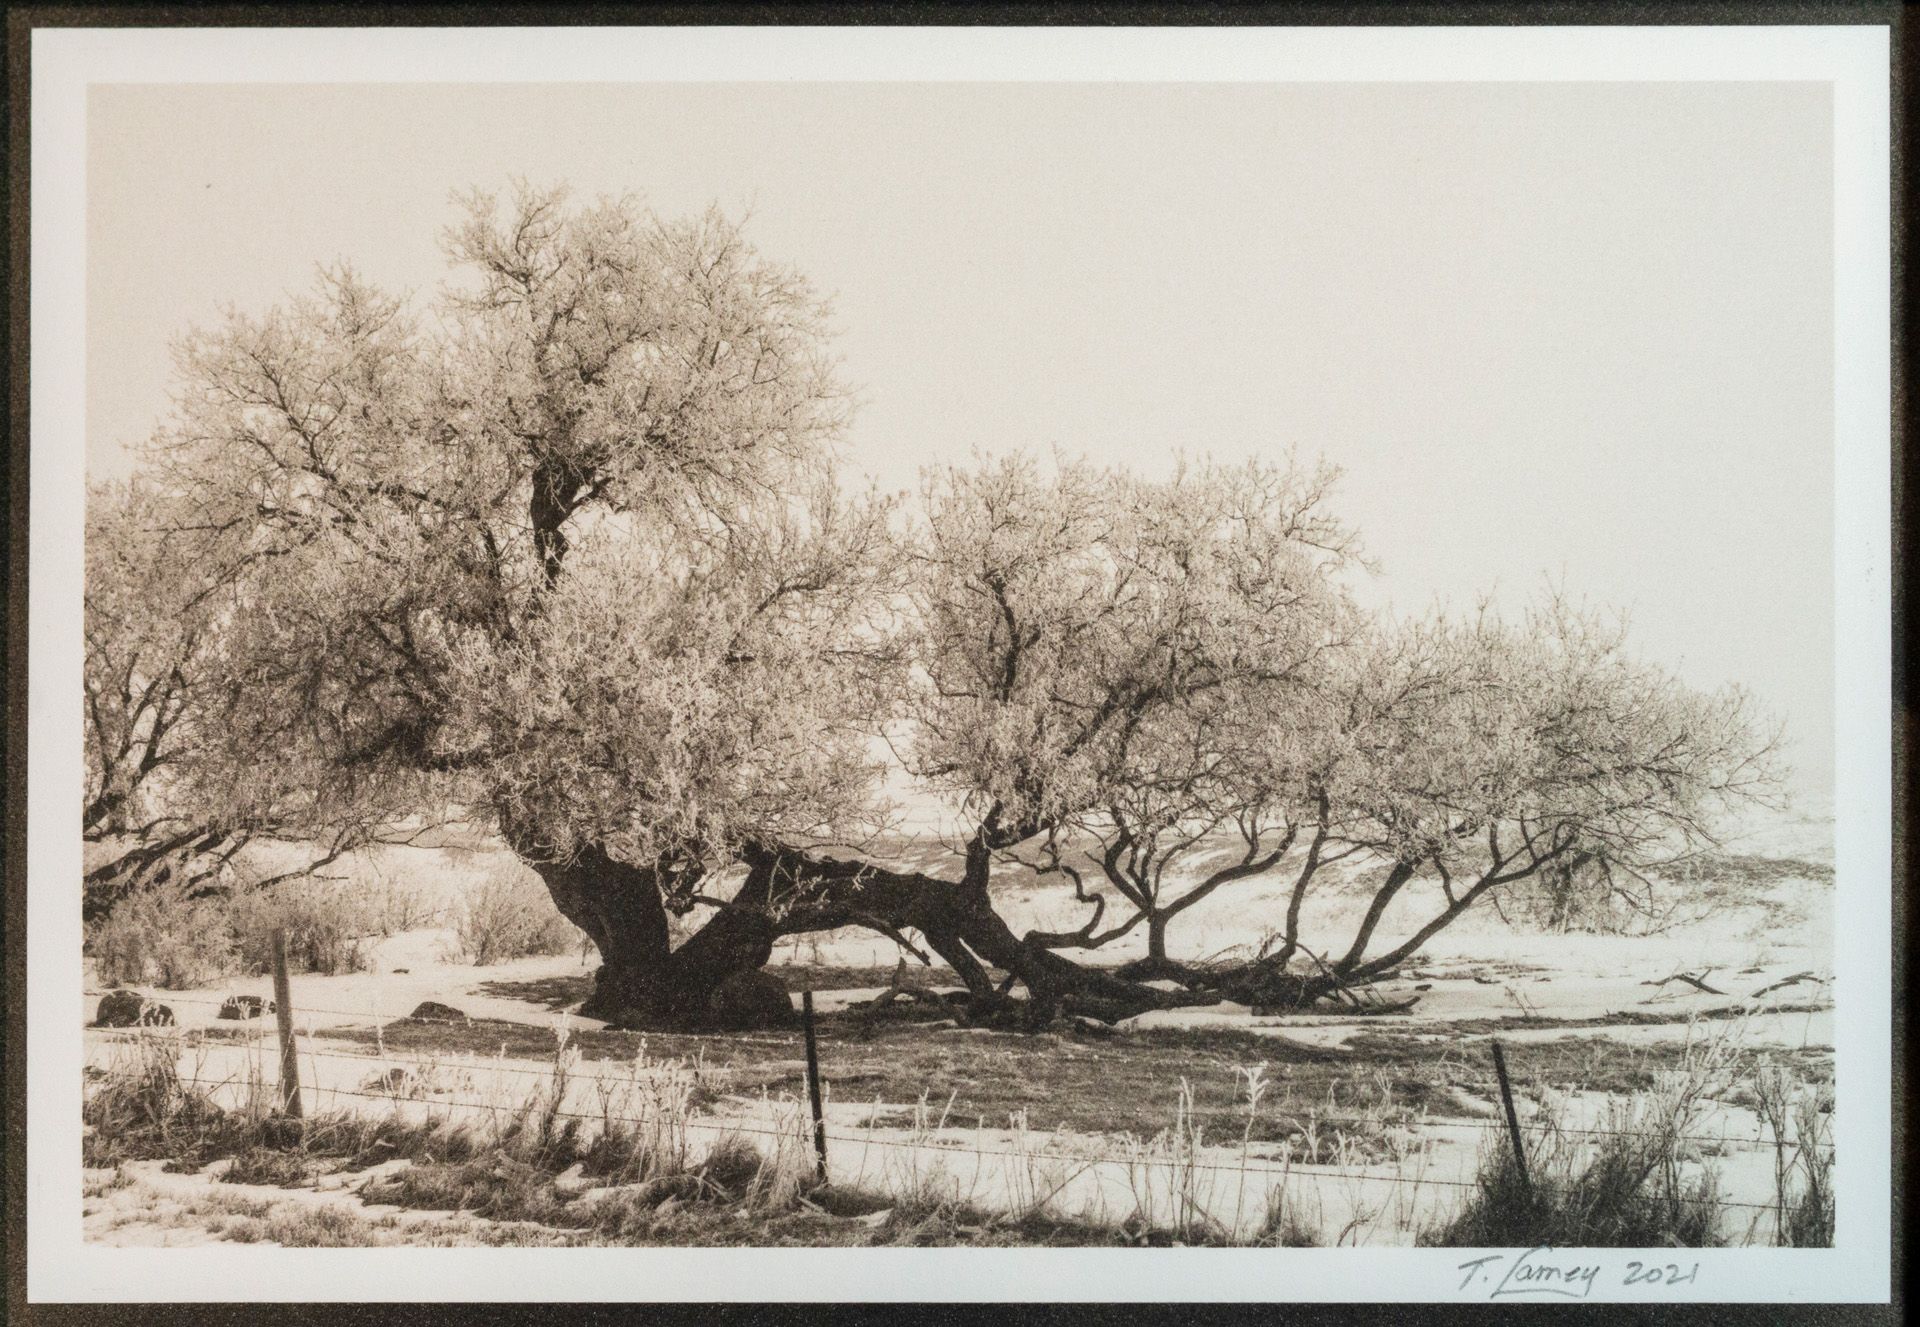 Tim Lamey, Fargo, ND, USA. “Frost Covered Tree,” photographic palladium print.